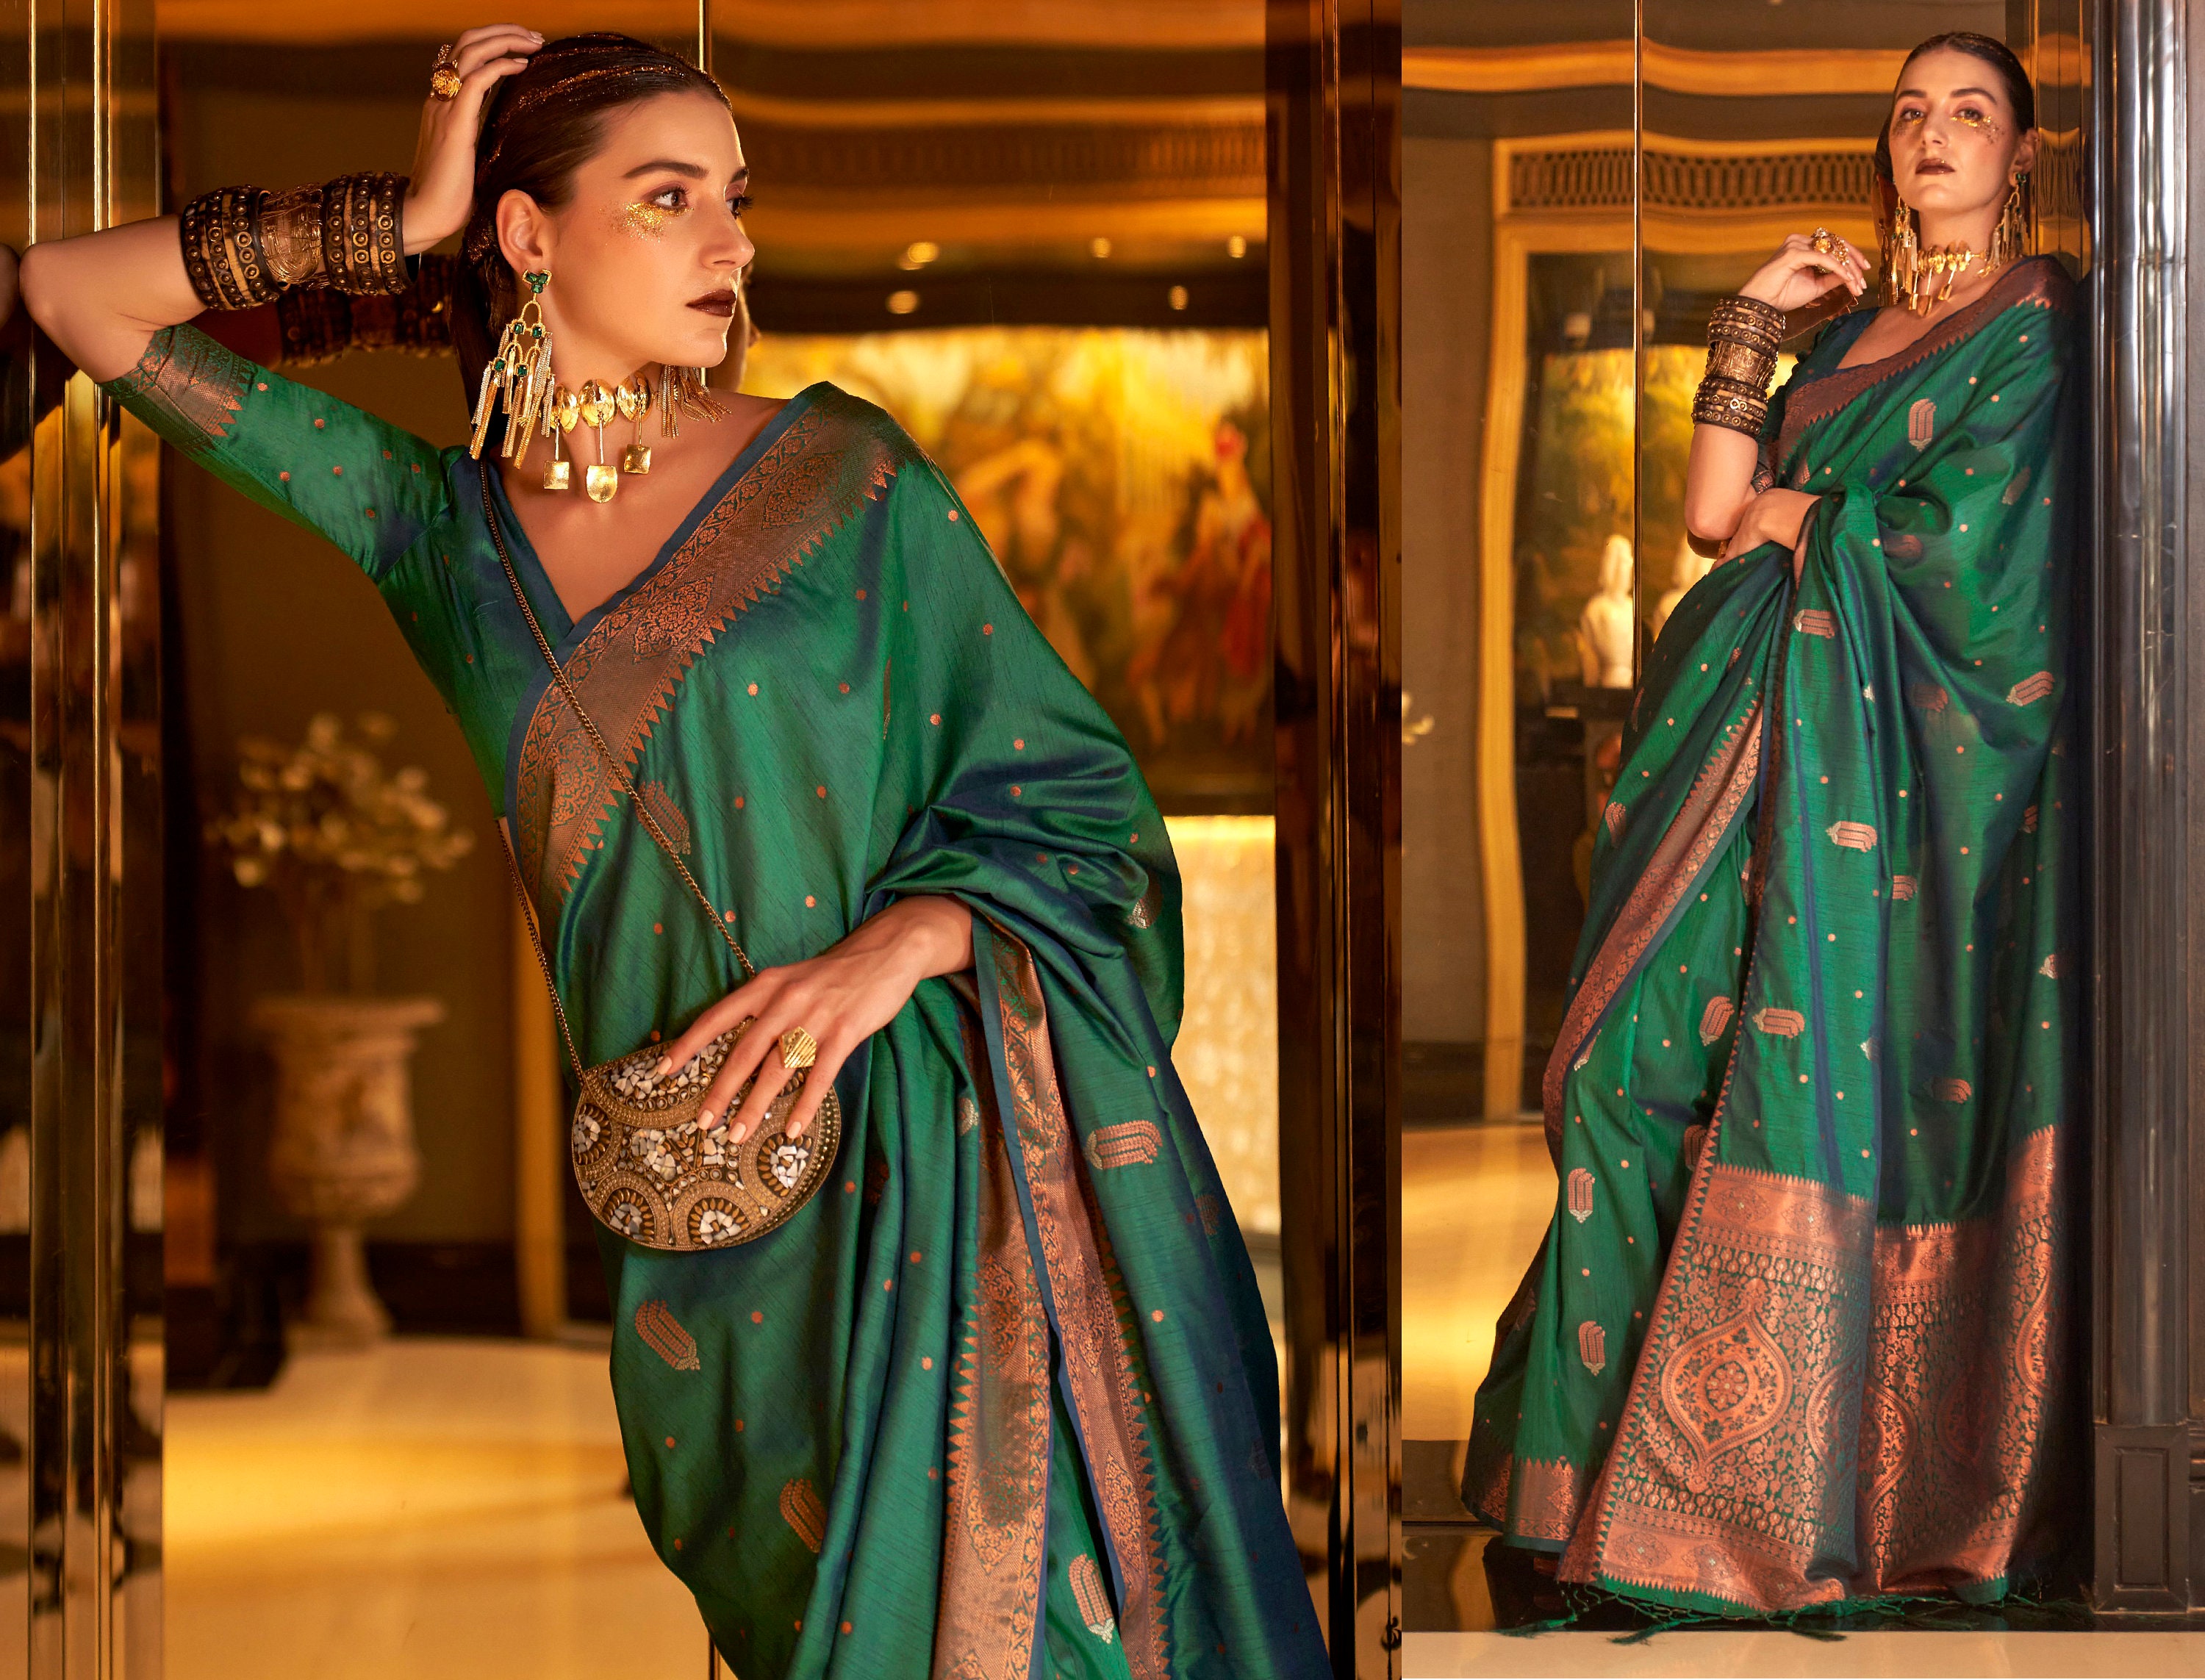 Indian Sari Fabric Electric Red - Handmade and vintage – Tara Design